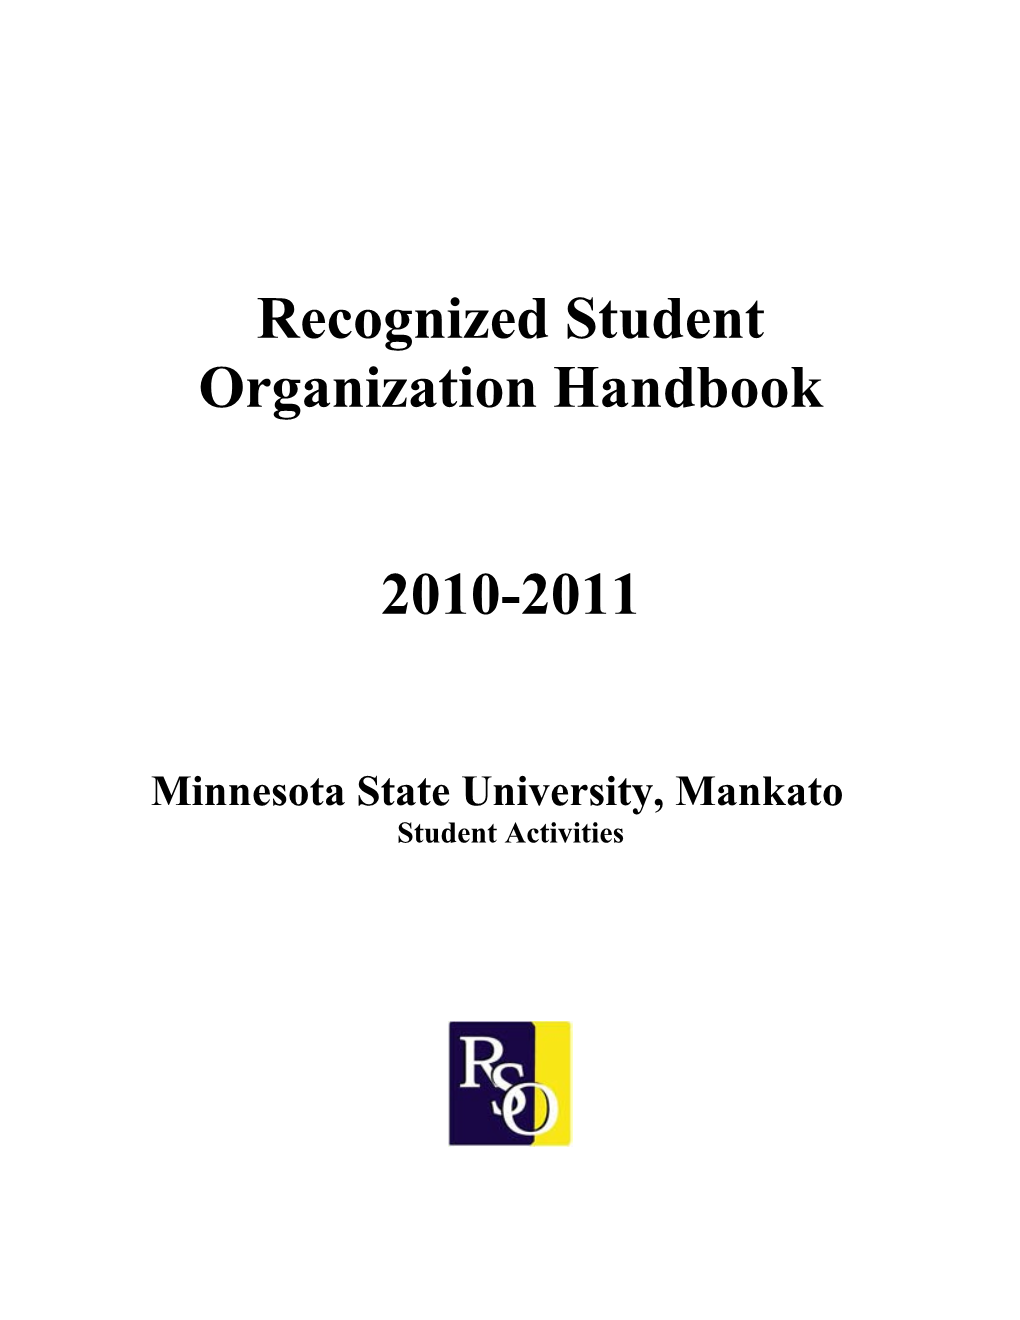 Recognized Student Organization Handbook